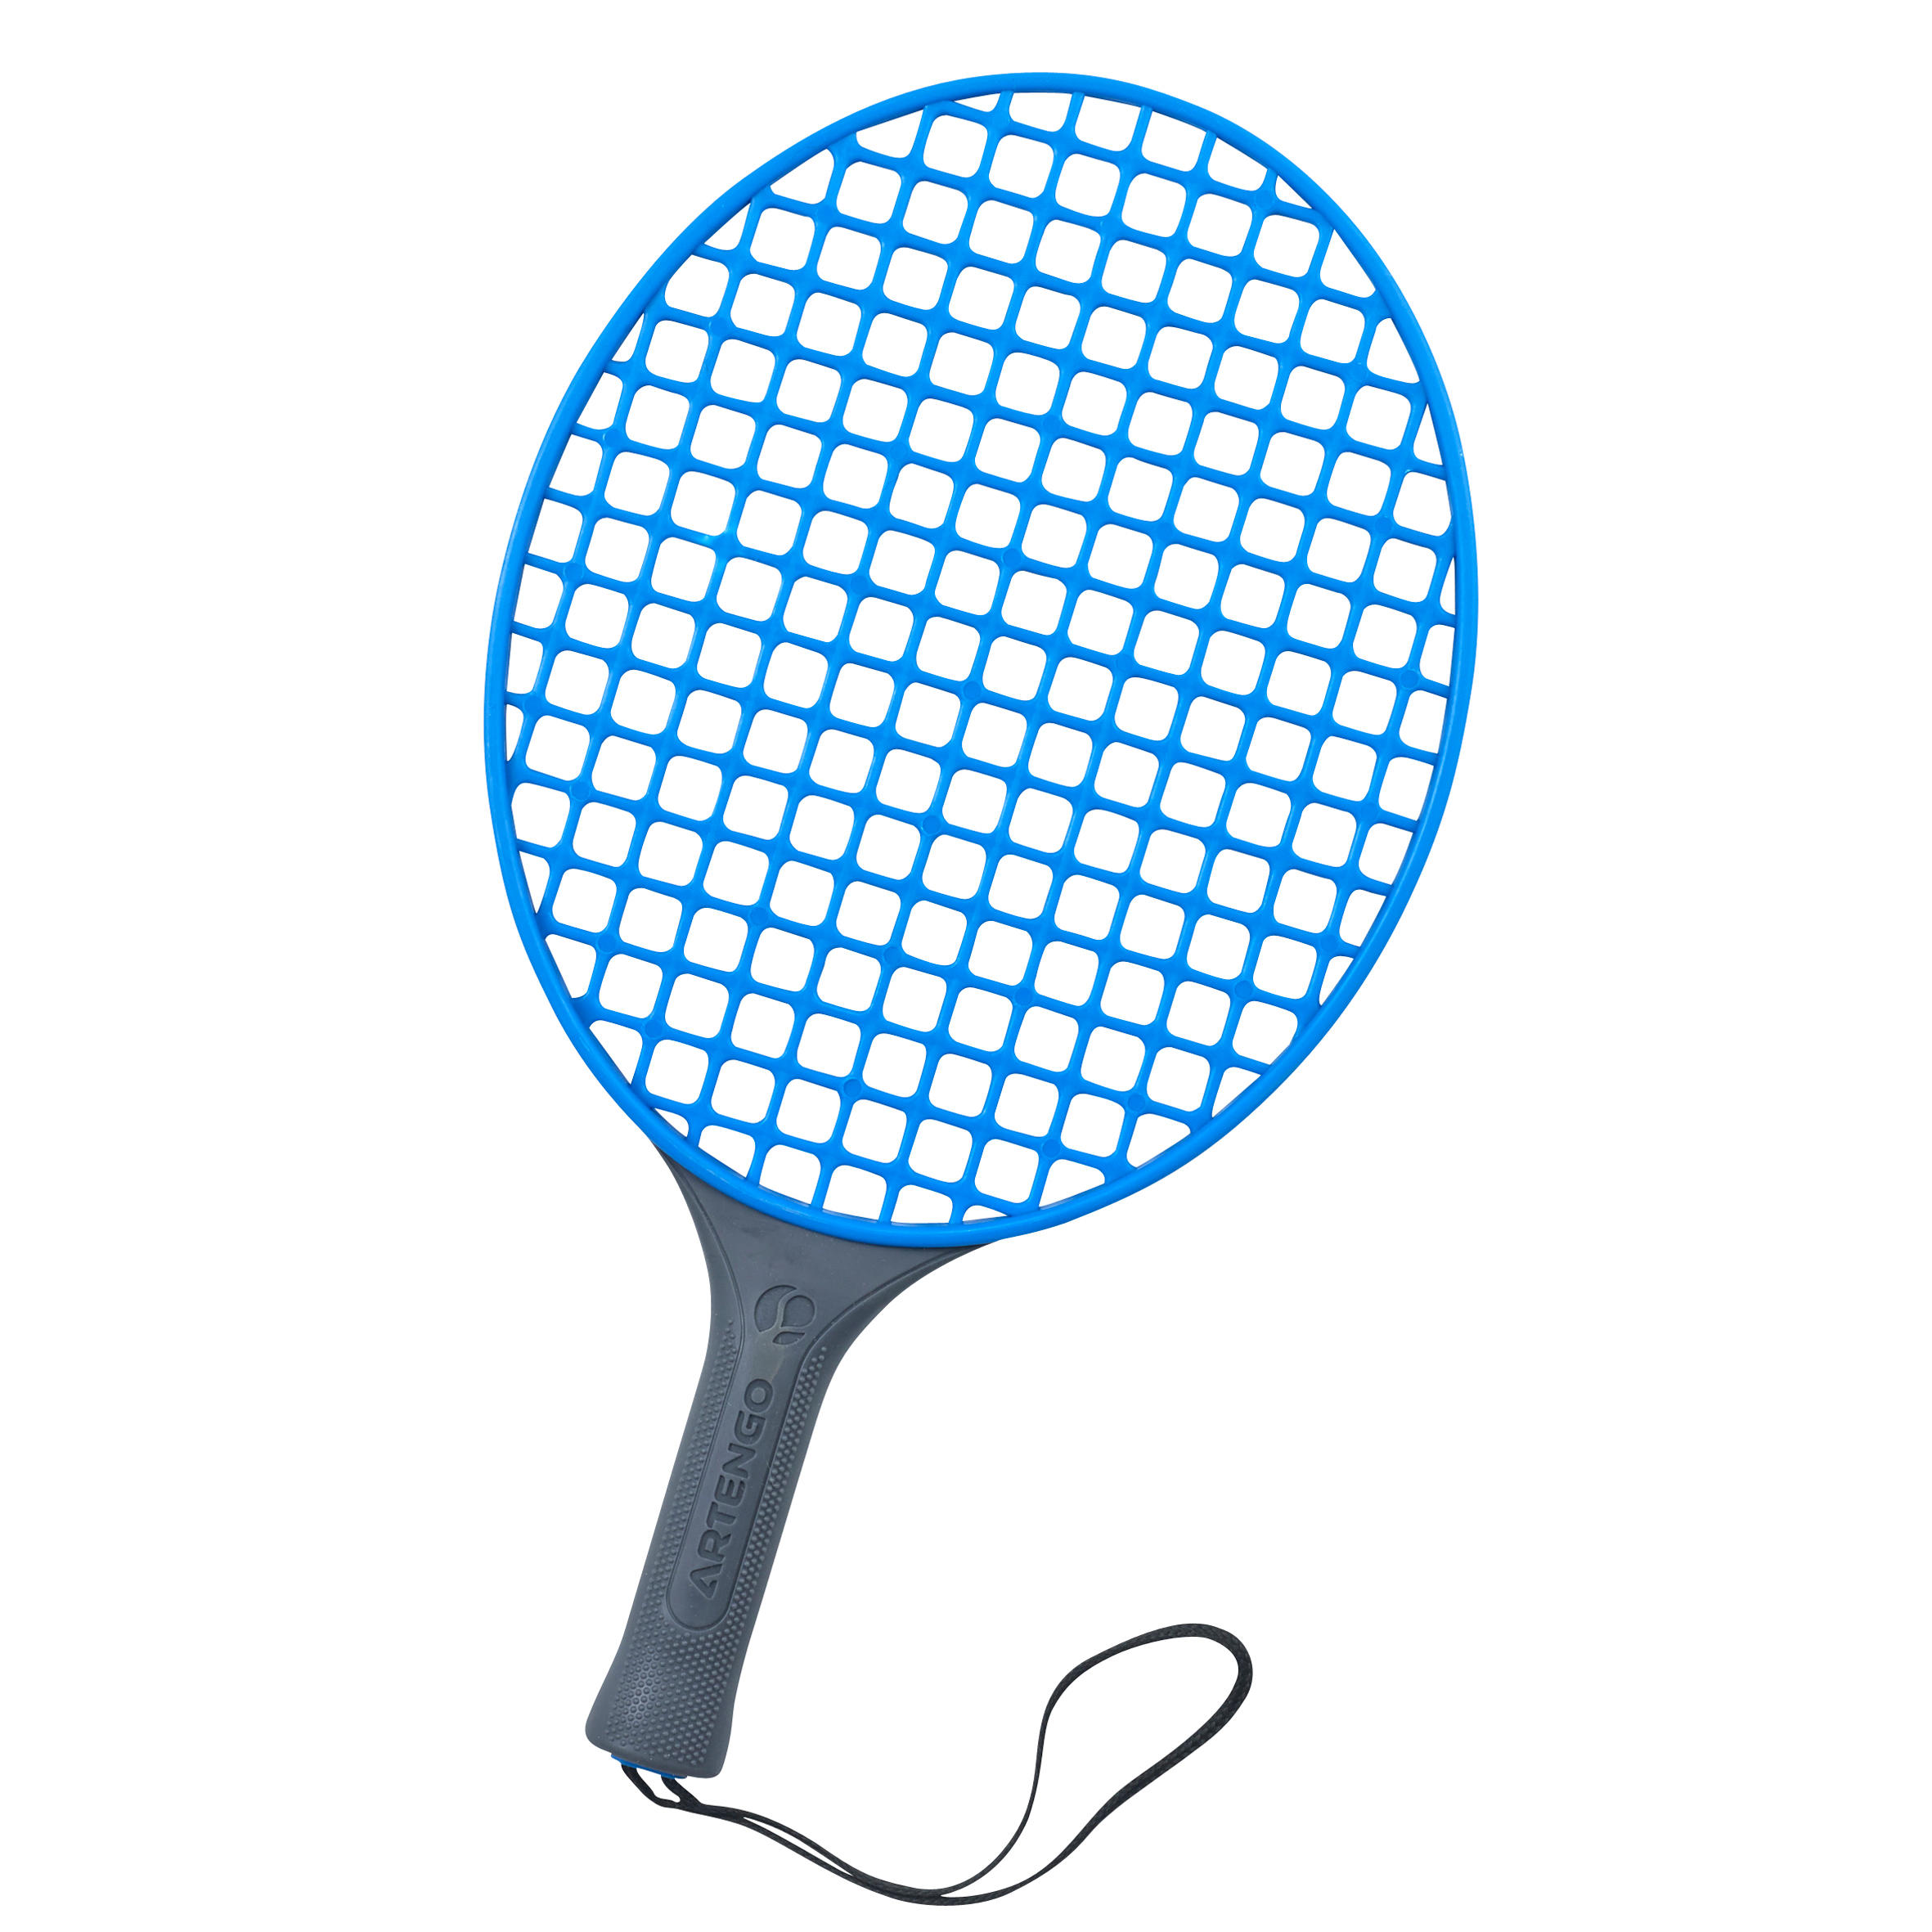 ARTENGO Turnball Racket - Blue